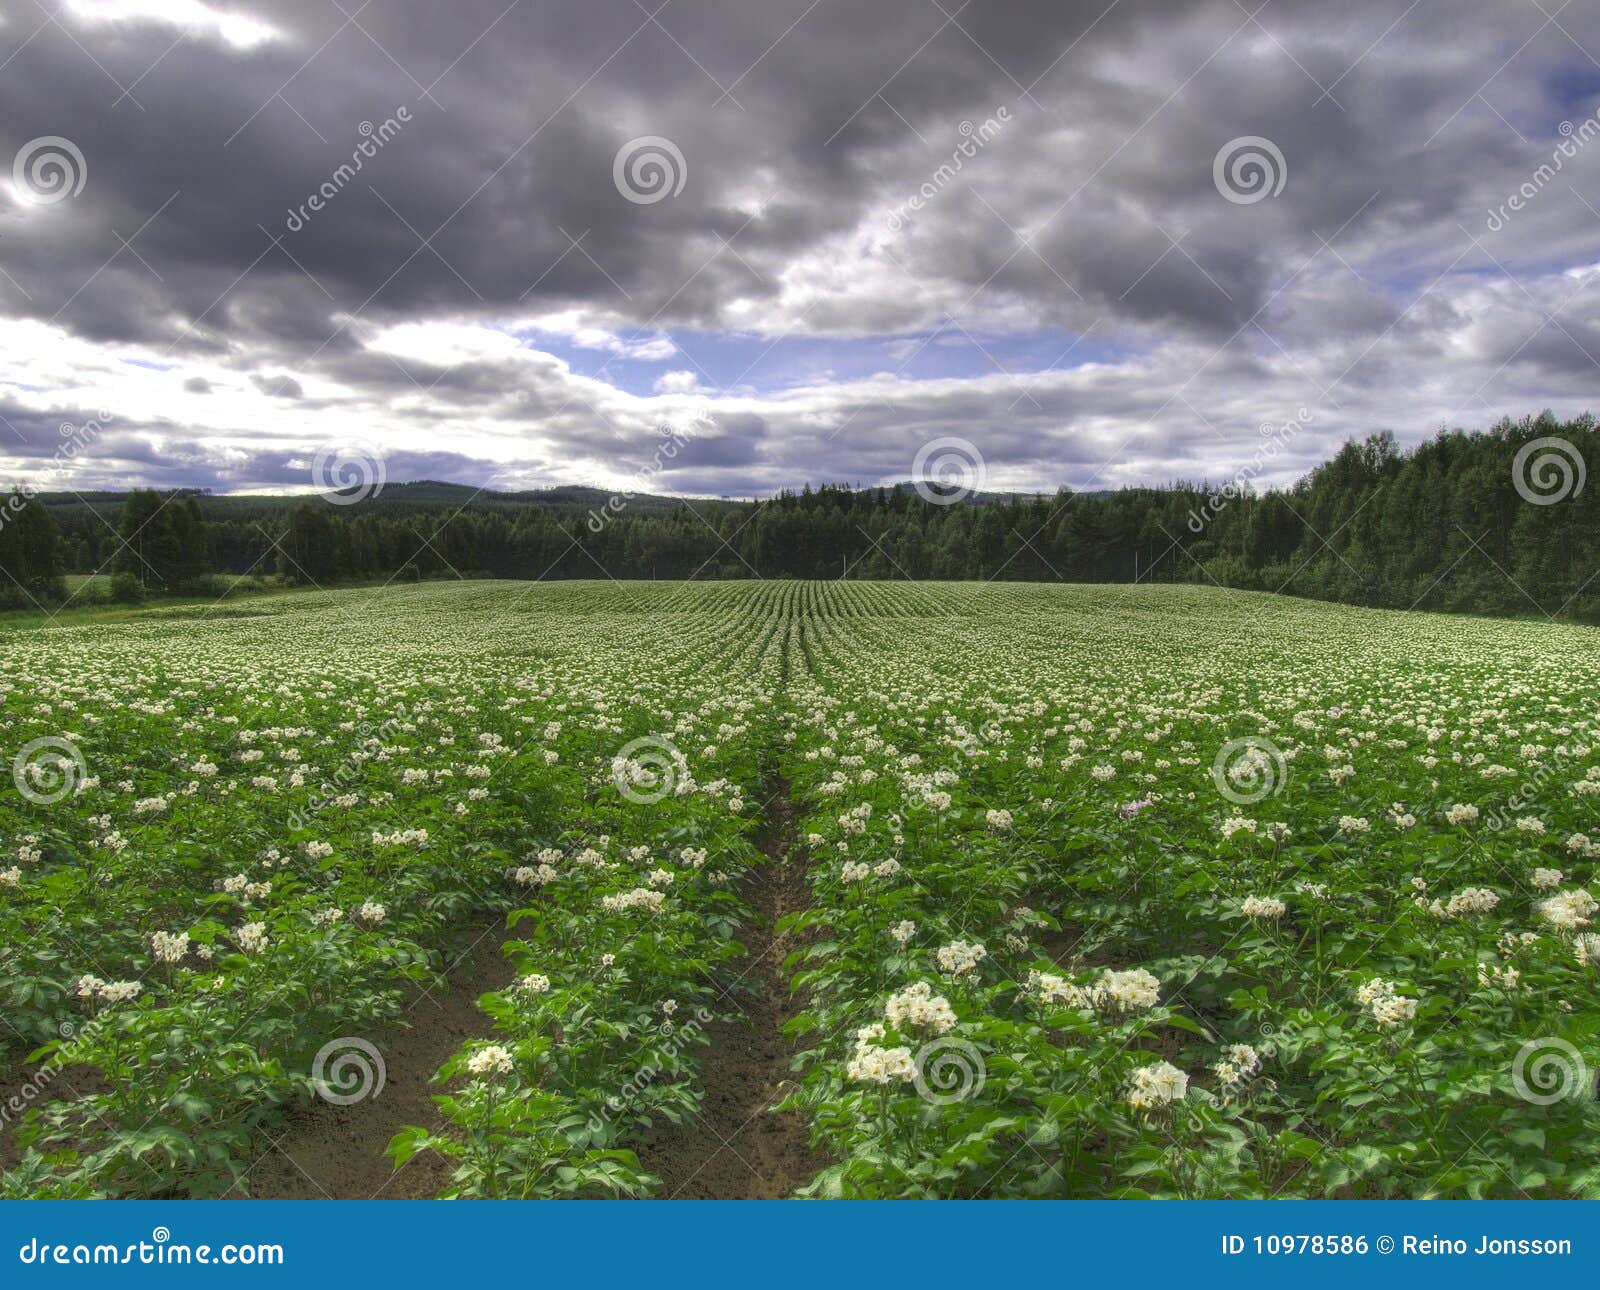 ecological potato field